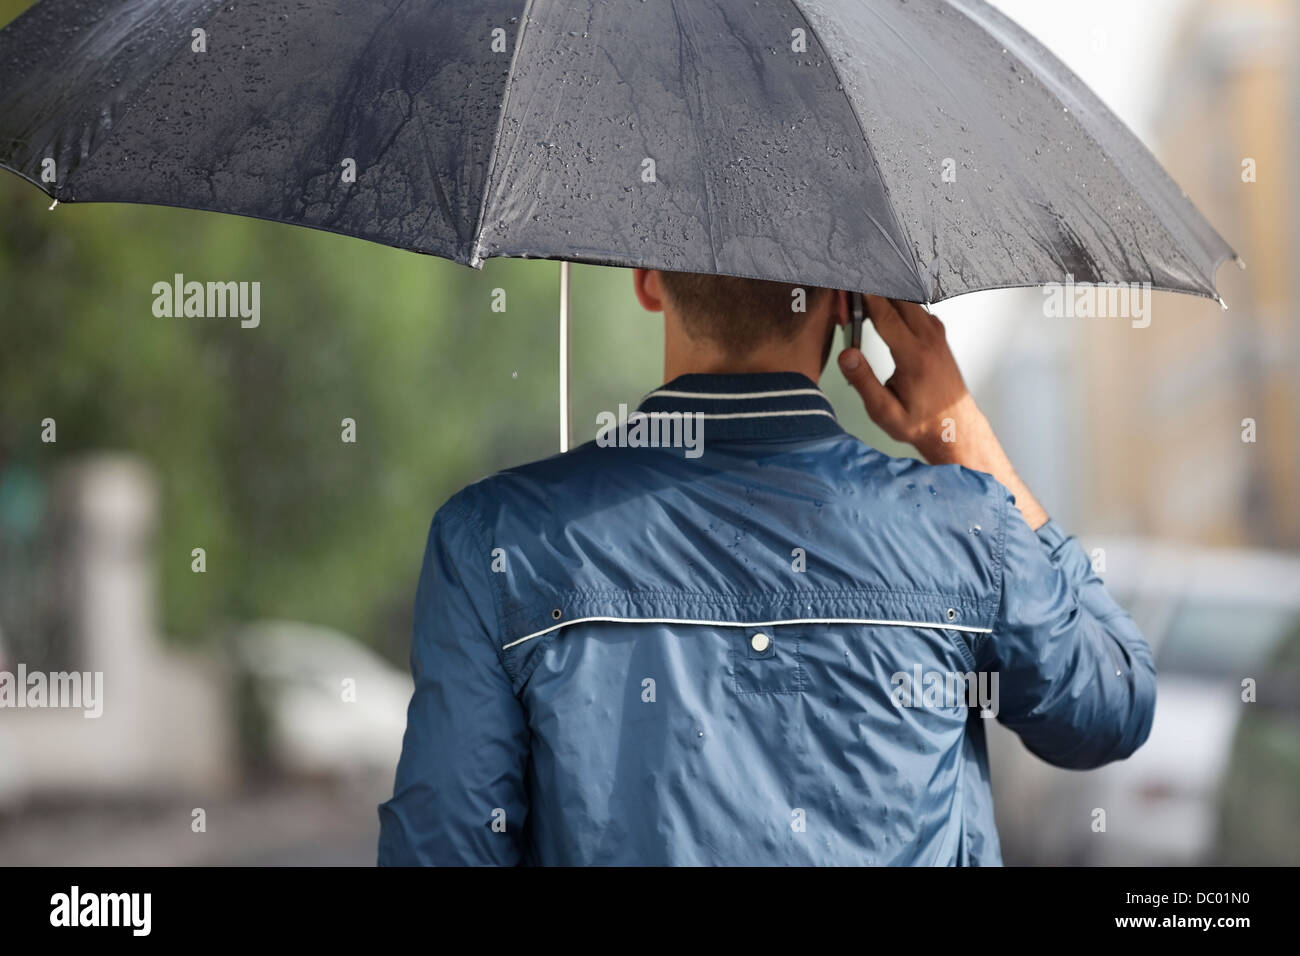 Man talking on cell phone under umbrella in rain Stock Photo